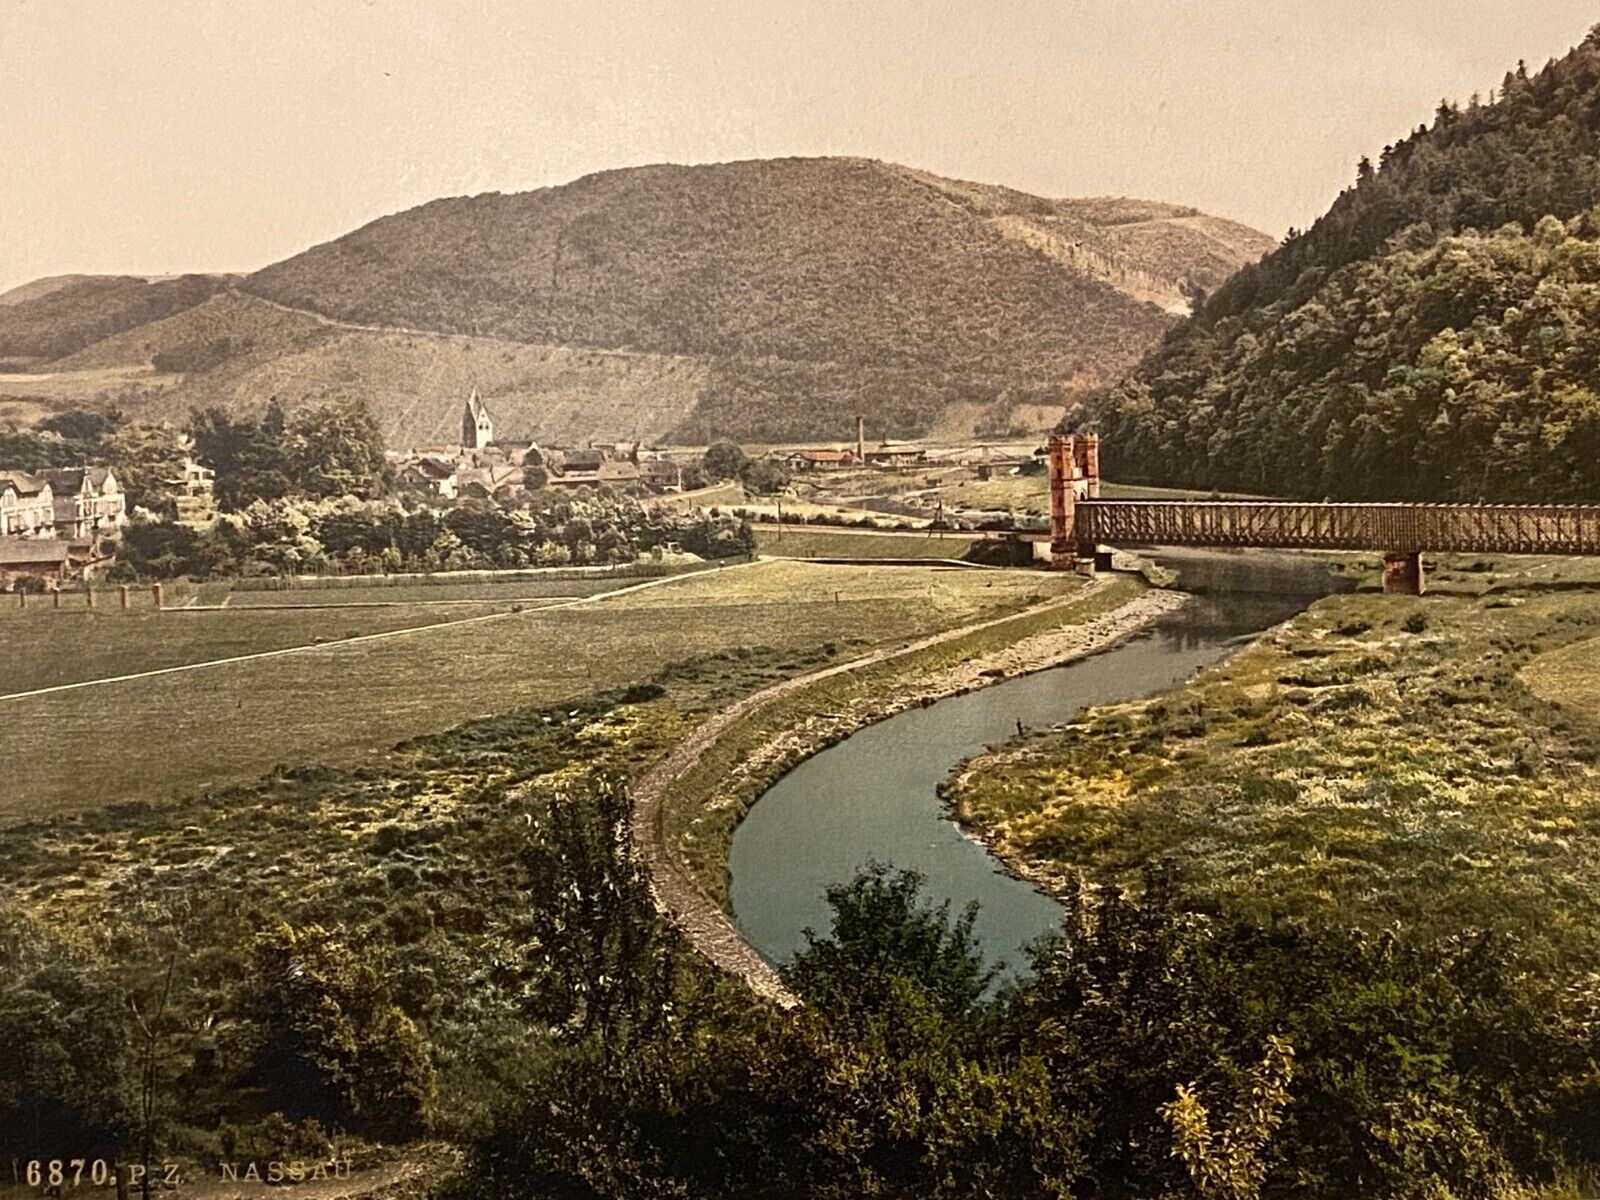 Photochrome PZ - NASSAU - Rhineland Palatinate - GERMANY - n°6870 - circa 1896